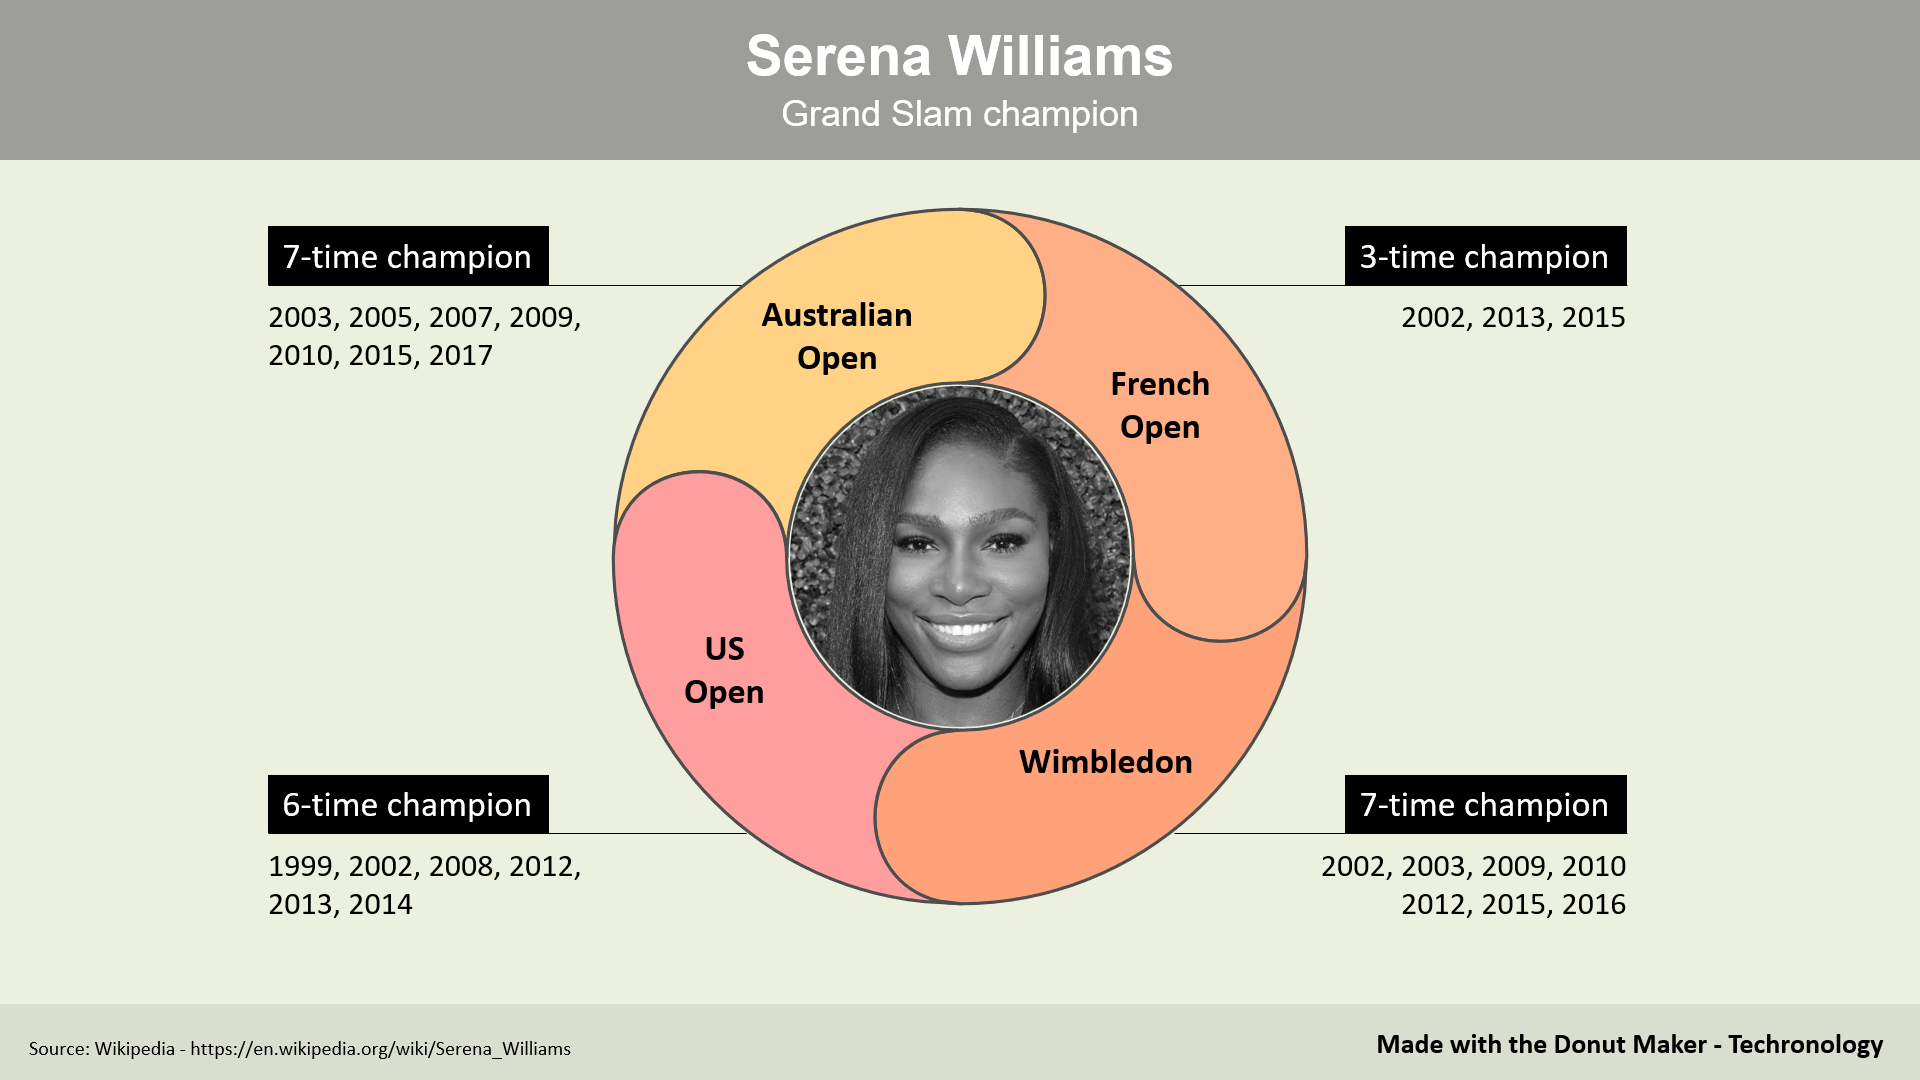 03 design sample - Serena Williams, Grand Slam champion - Techronology